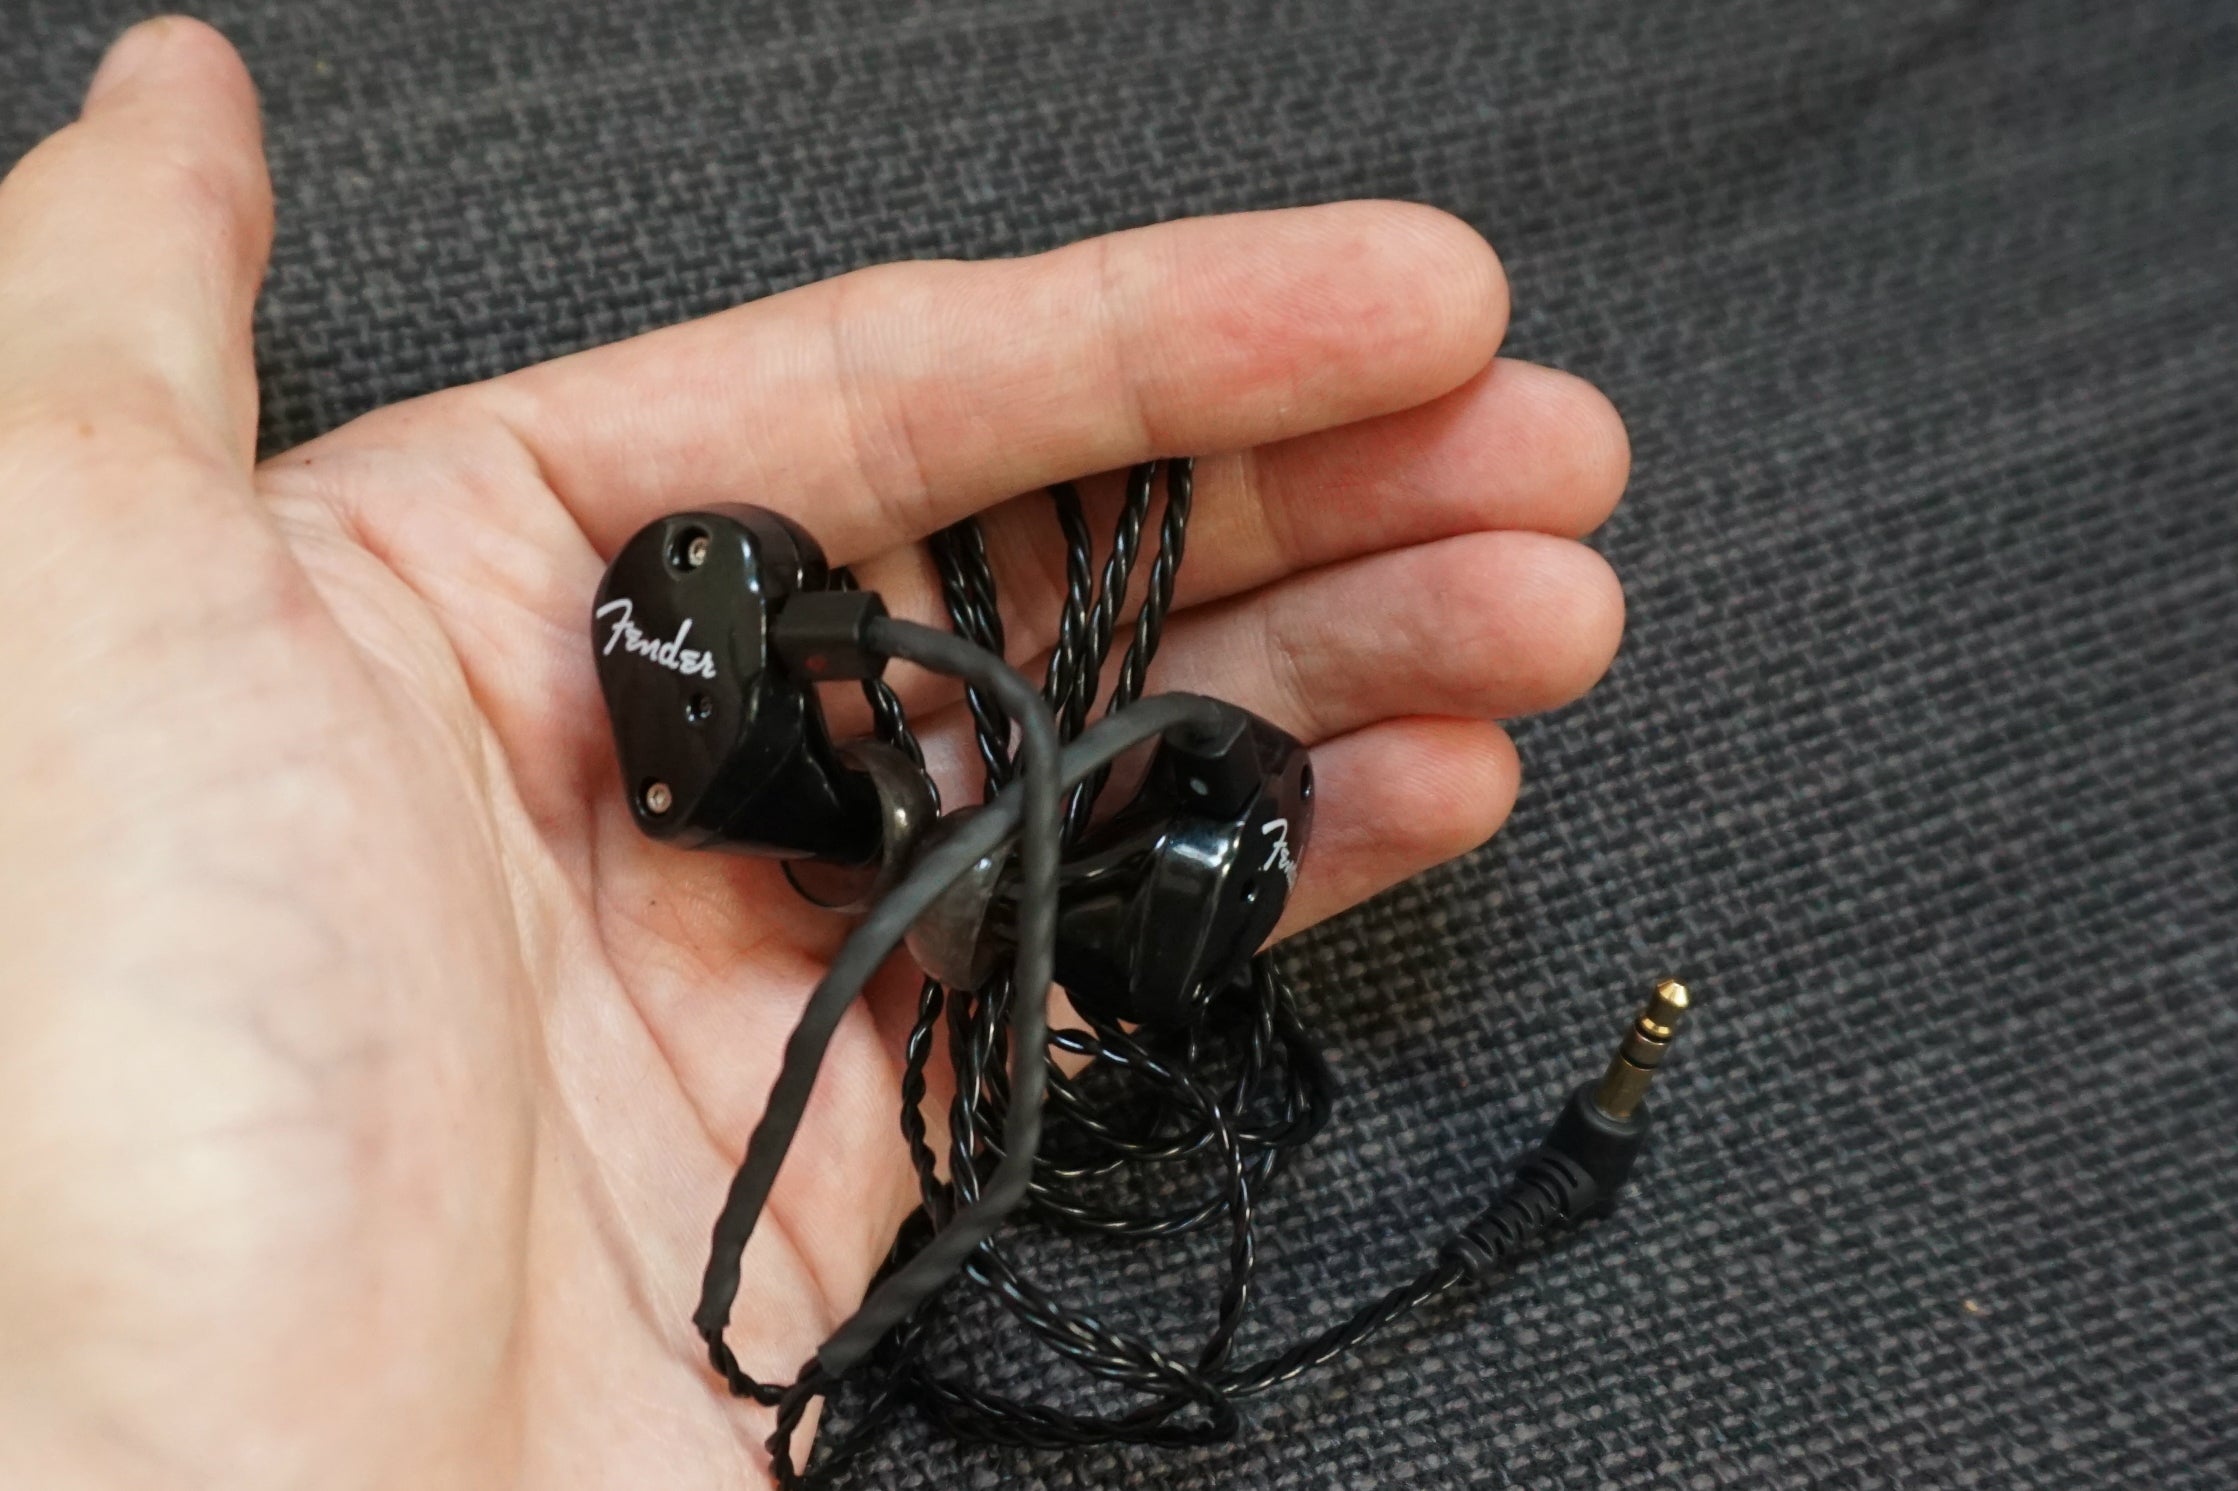 Fender FXA2 in-ear monitors held in a person's palm.